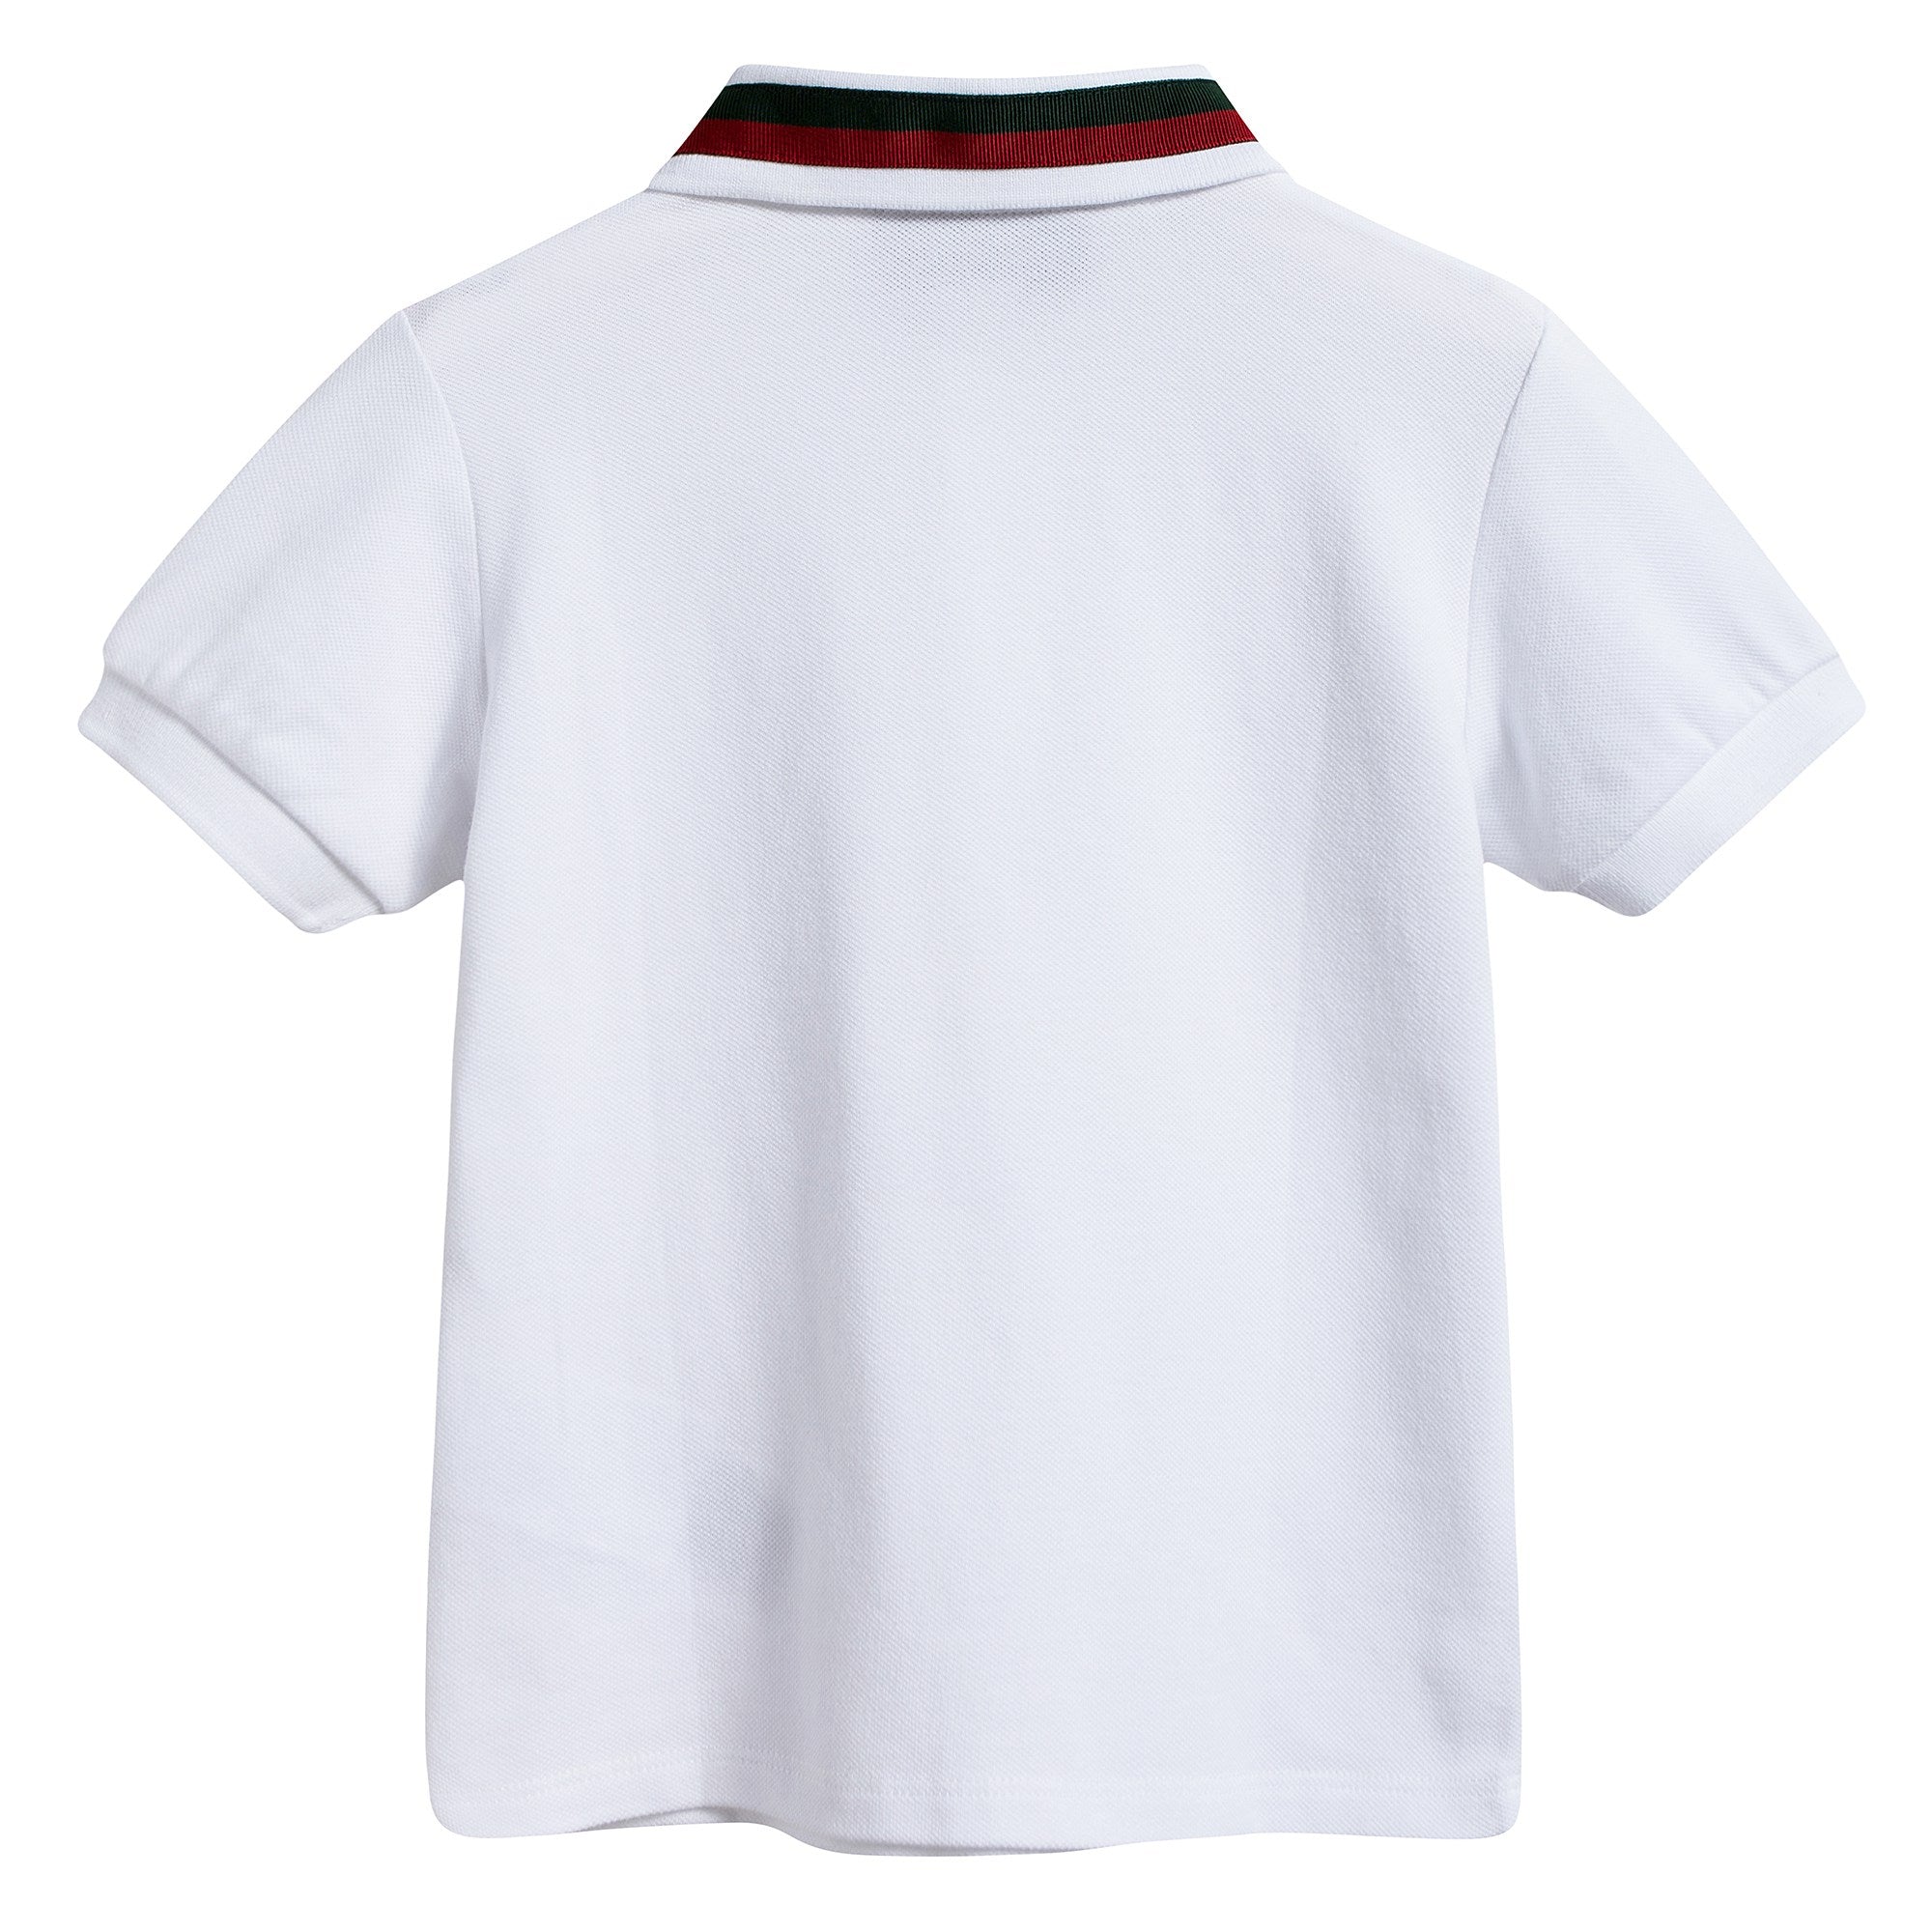 Boys White Cotton Polo Shirt With Star Trim